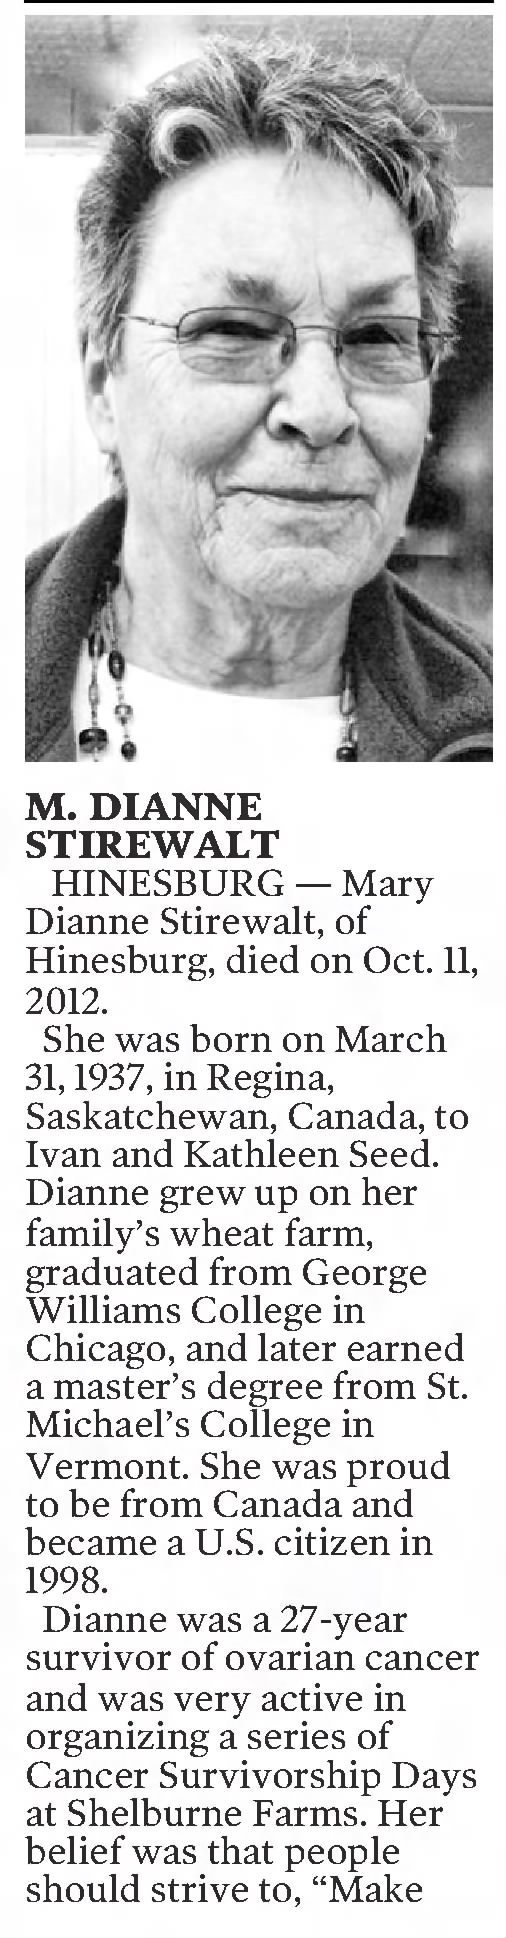 Obituary: Mary Dianne Stirewalt née Seed - part 1